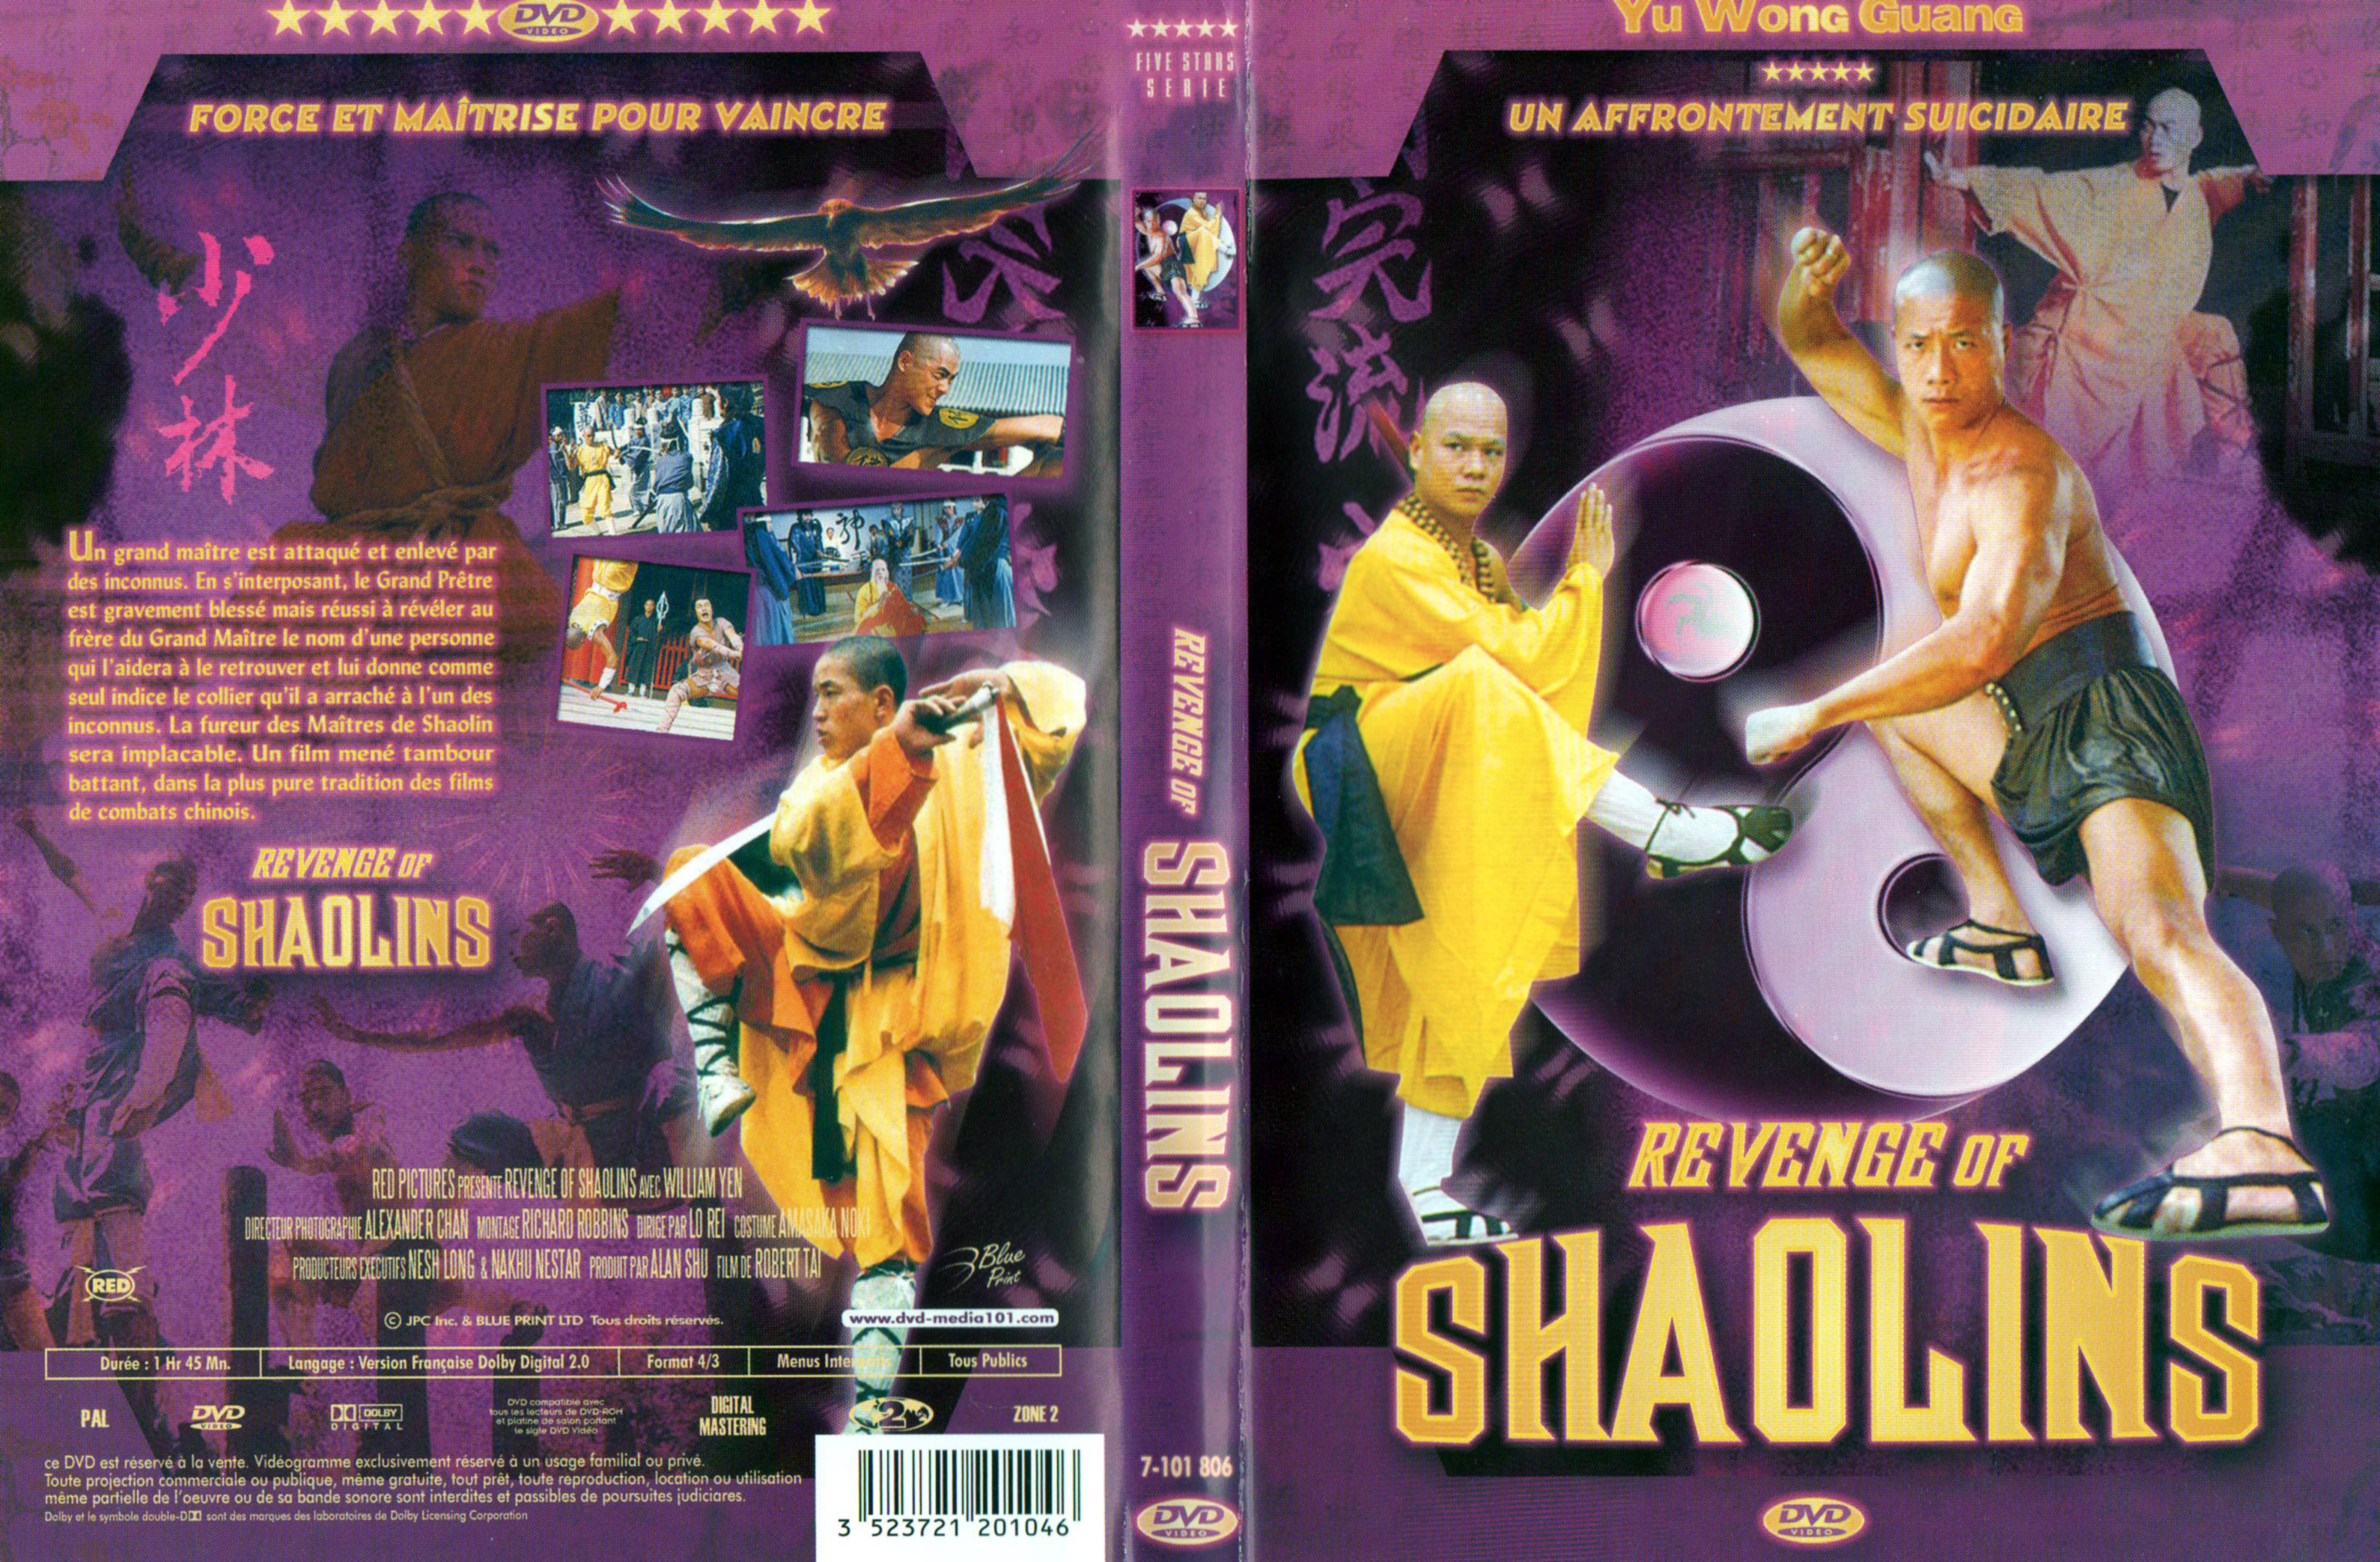 Jaquette DVD Revenge of shaolins